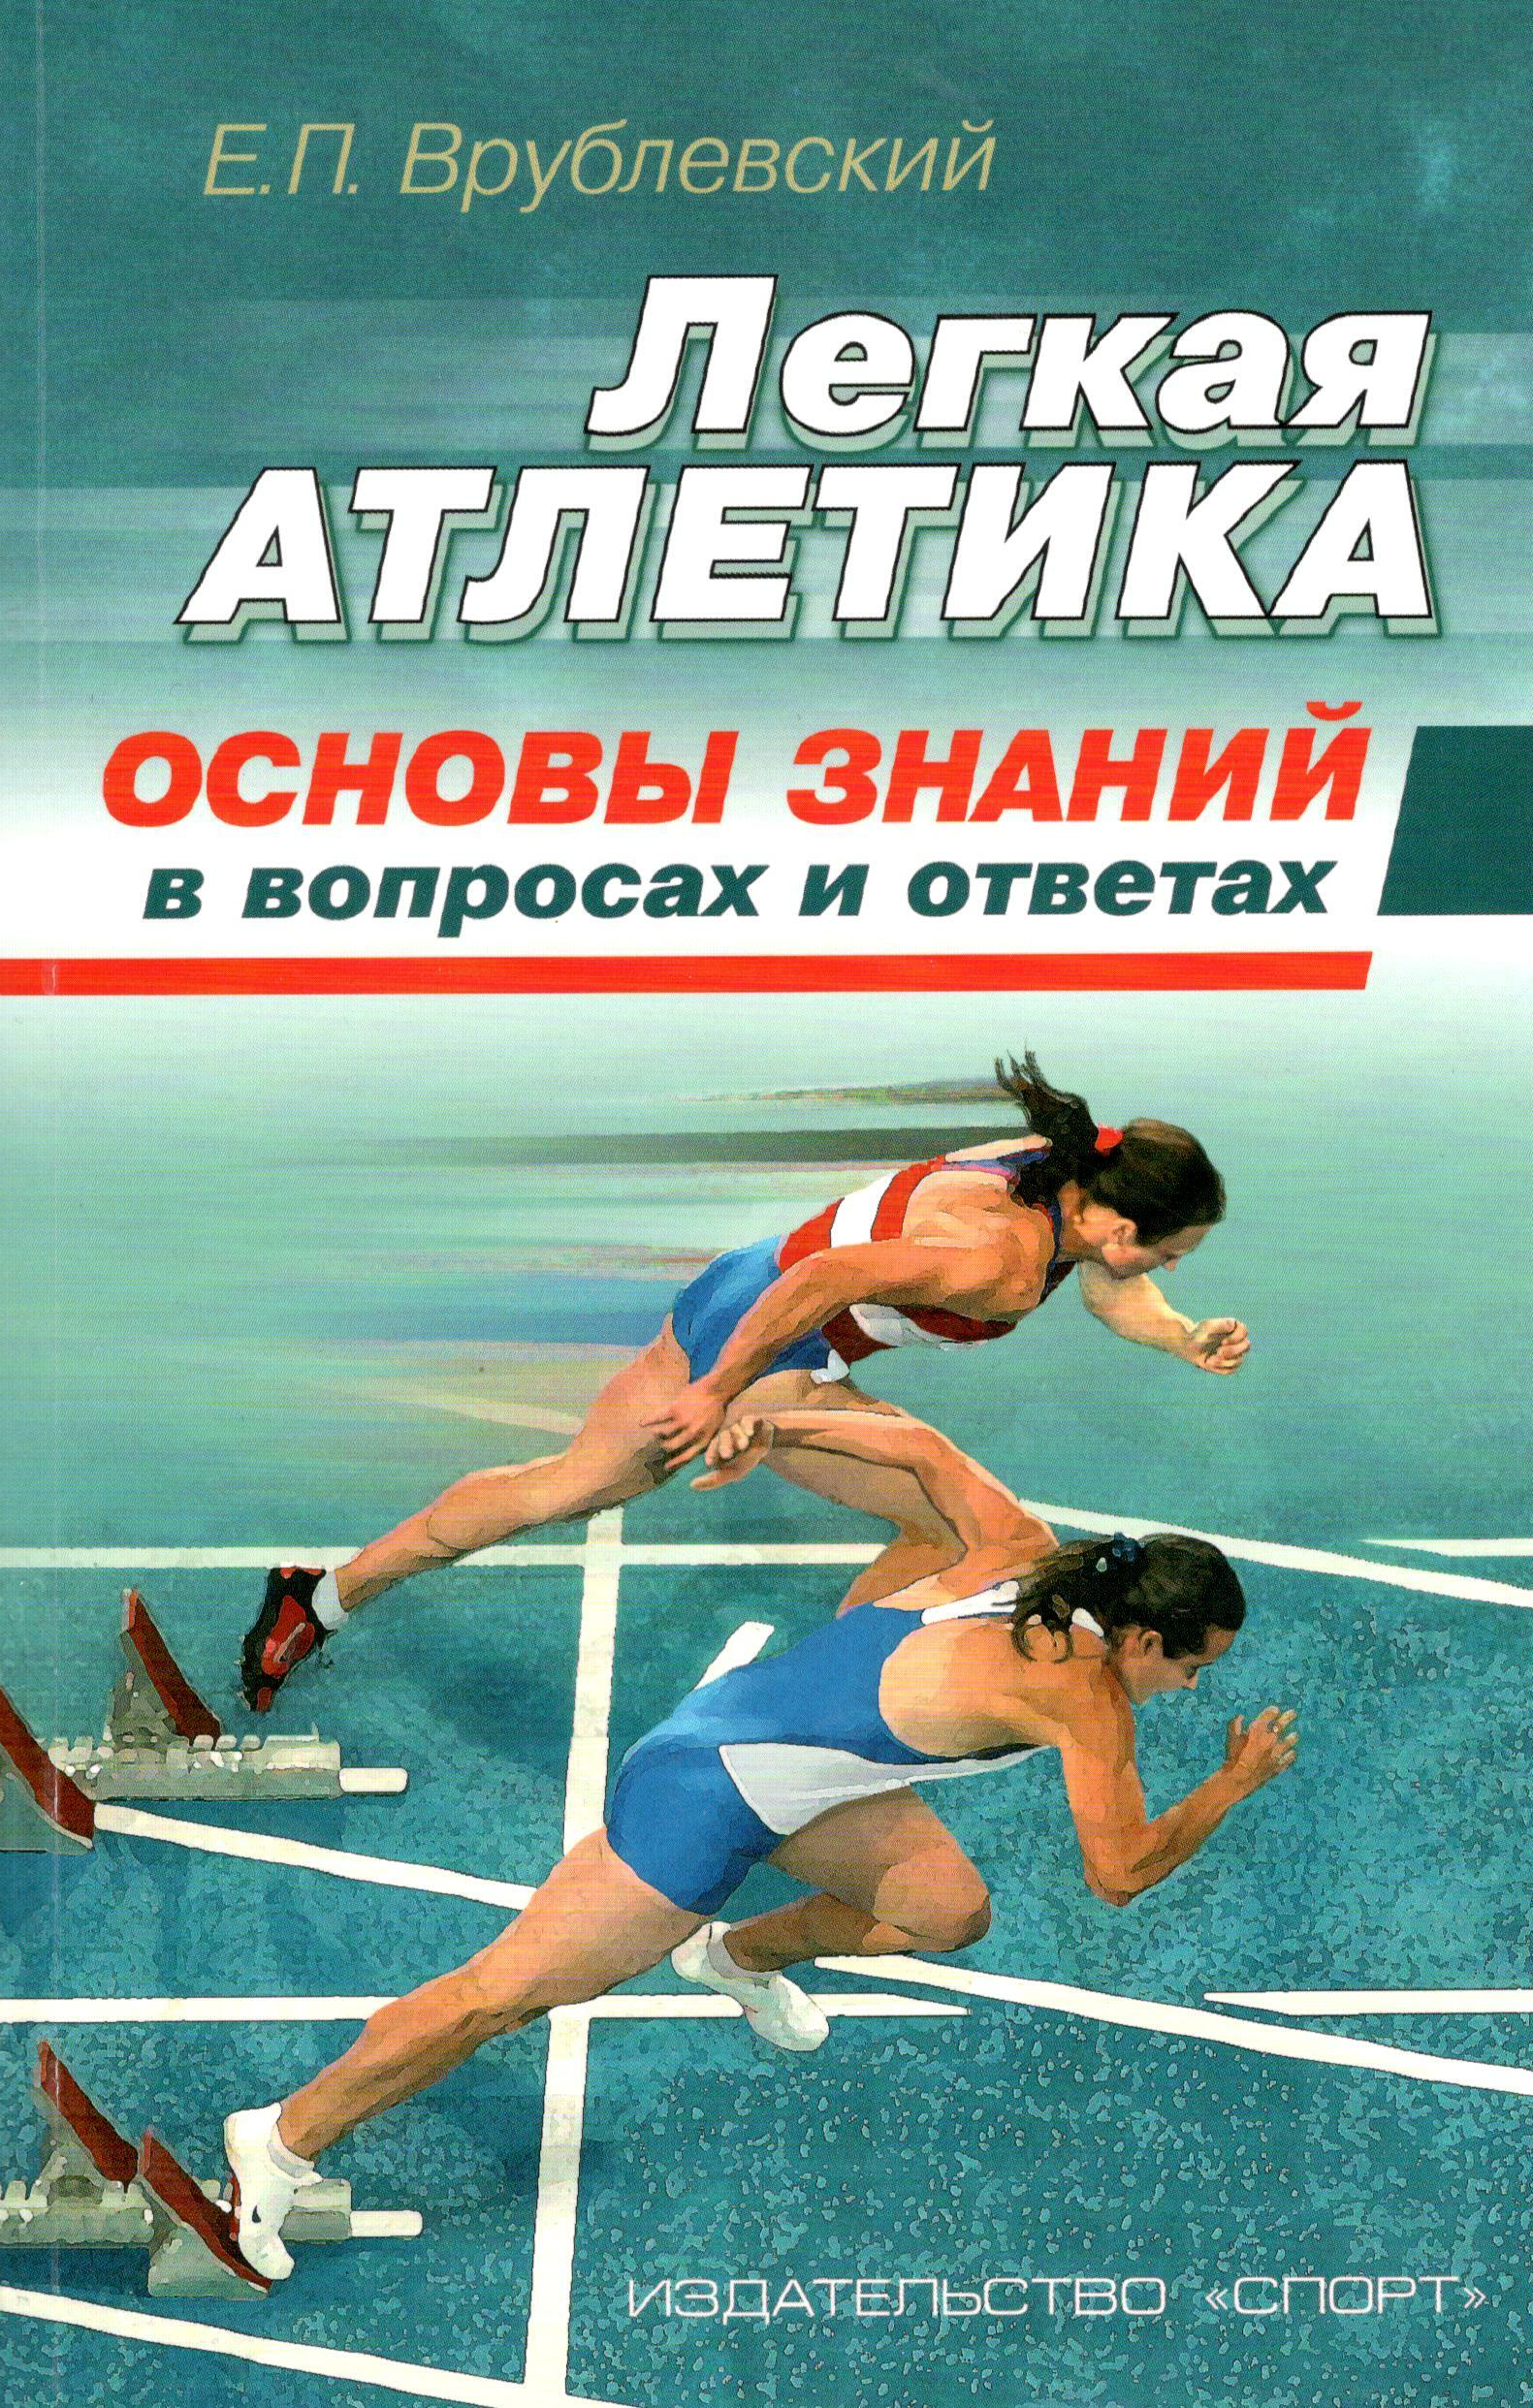 Книги про спортсменов